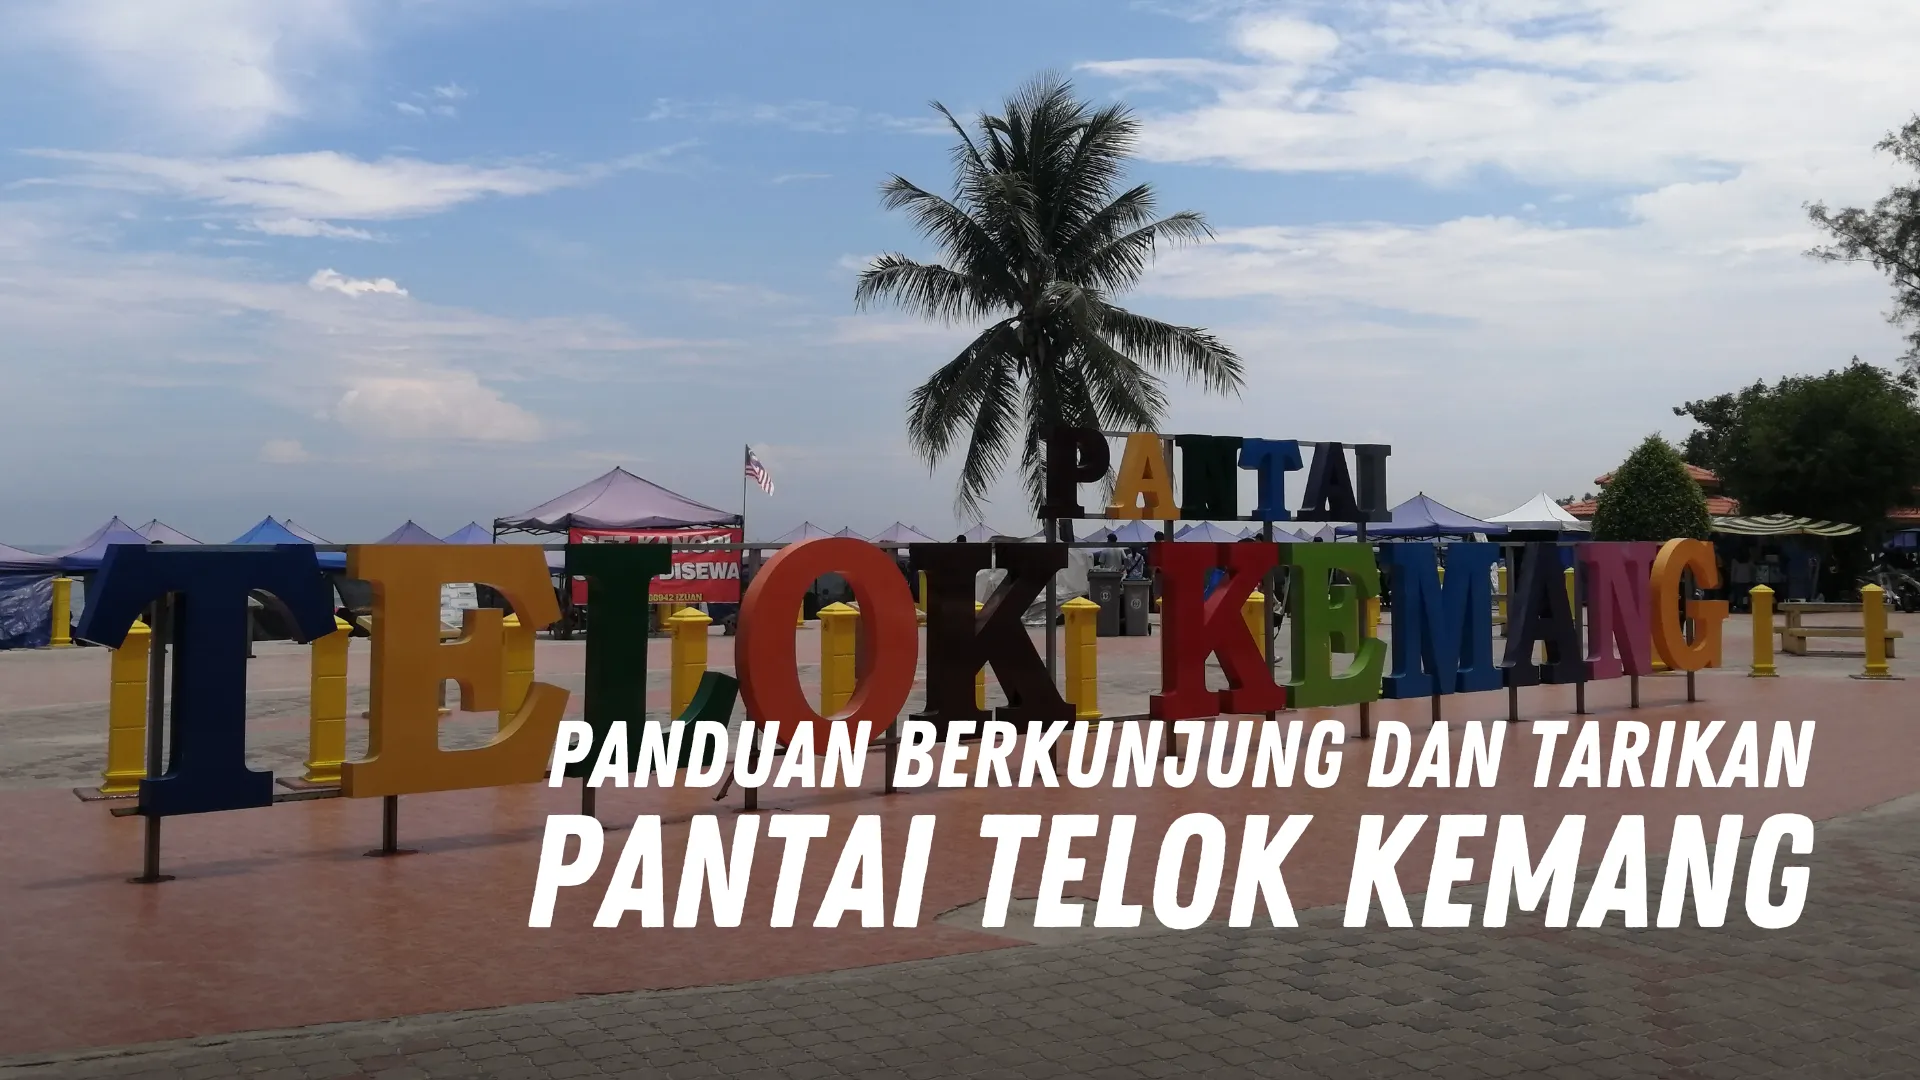 Review Pantai Telok Kemang Malaysia